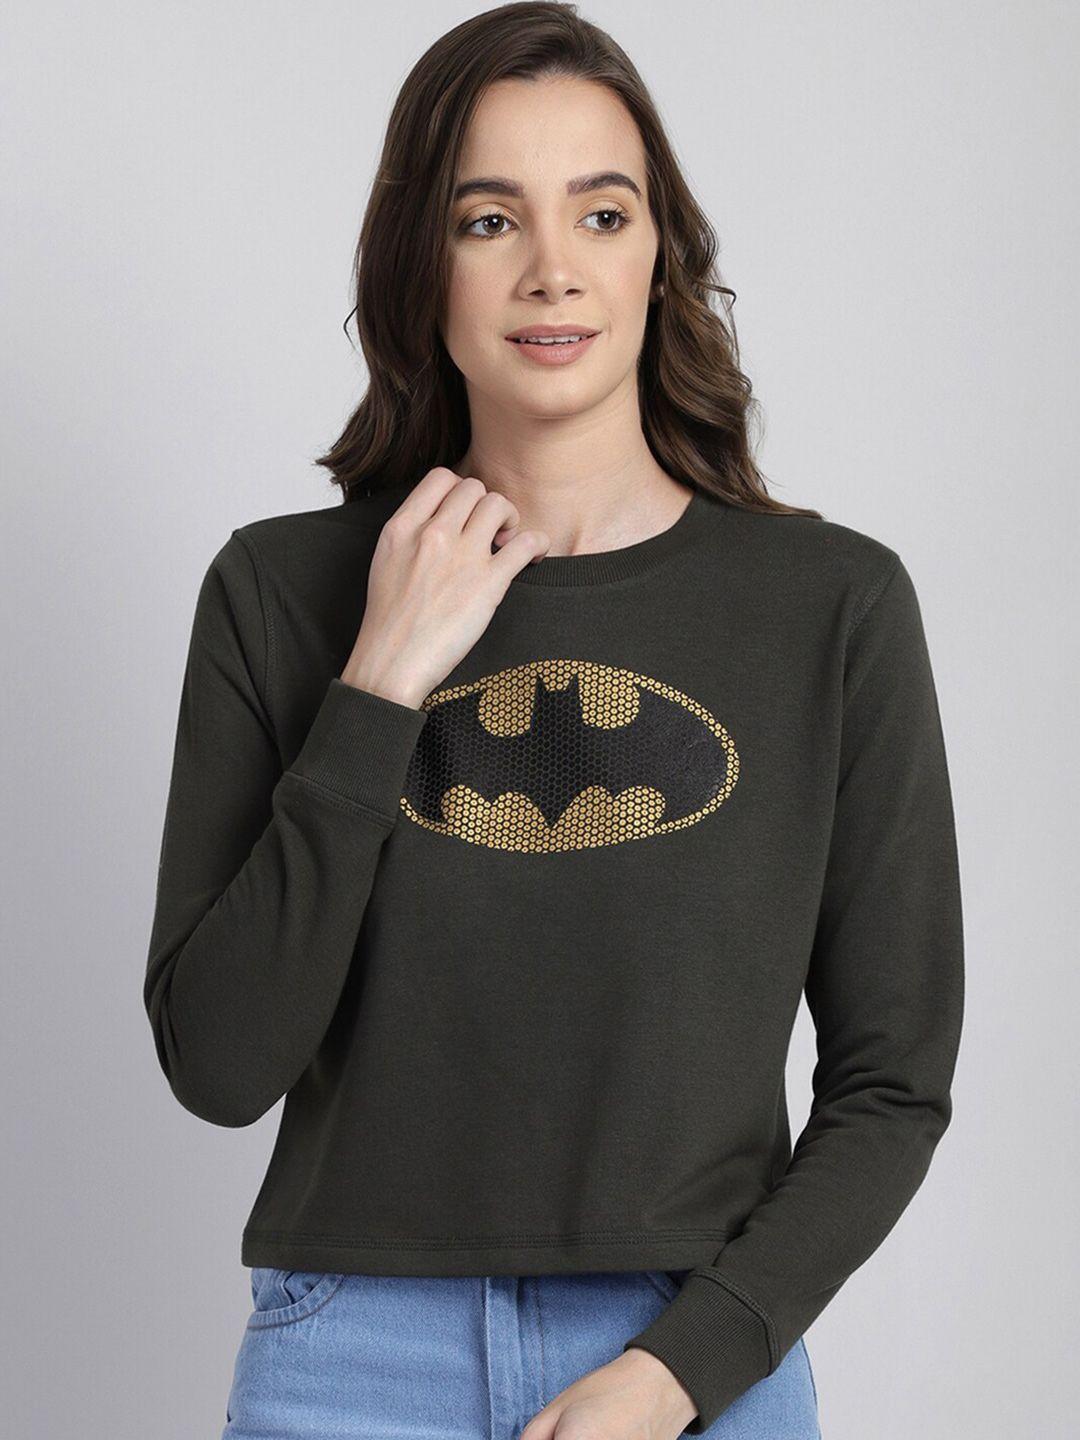 free authority batman printed cotton sweatshirt